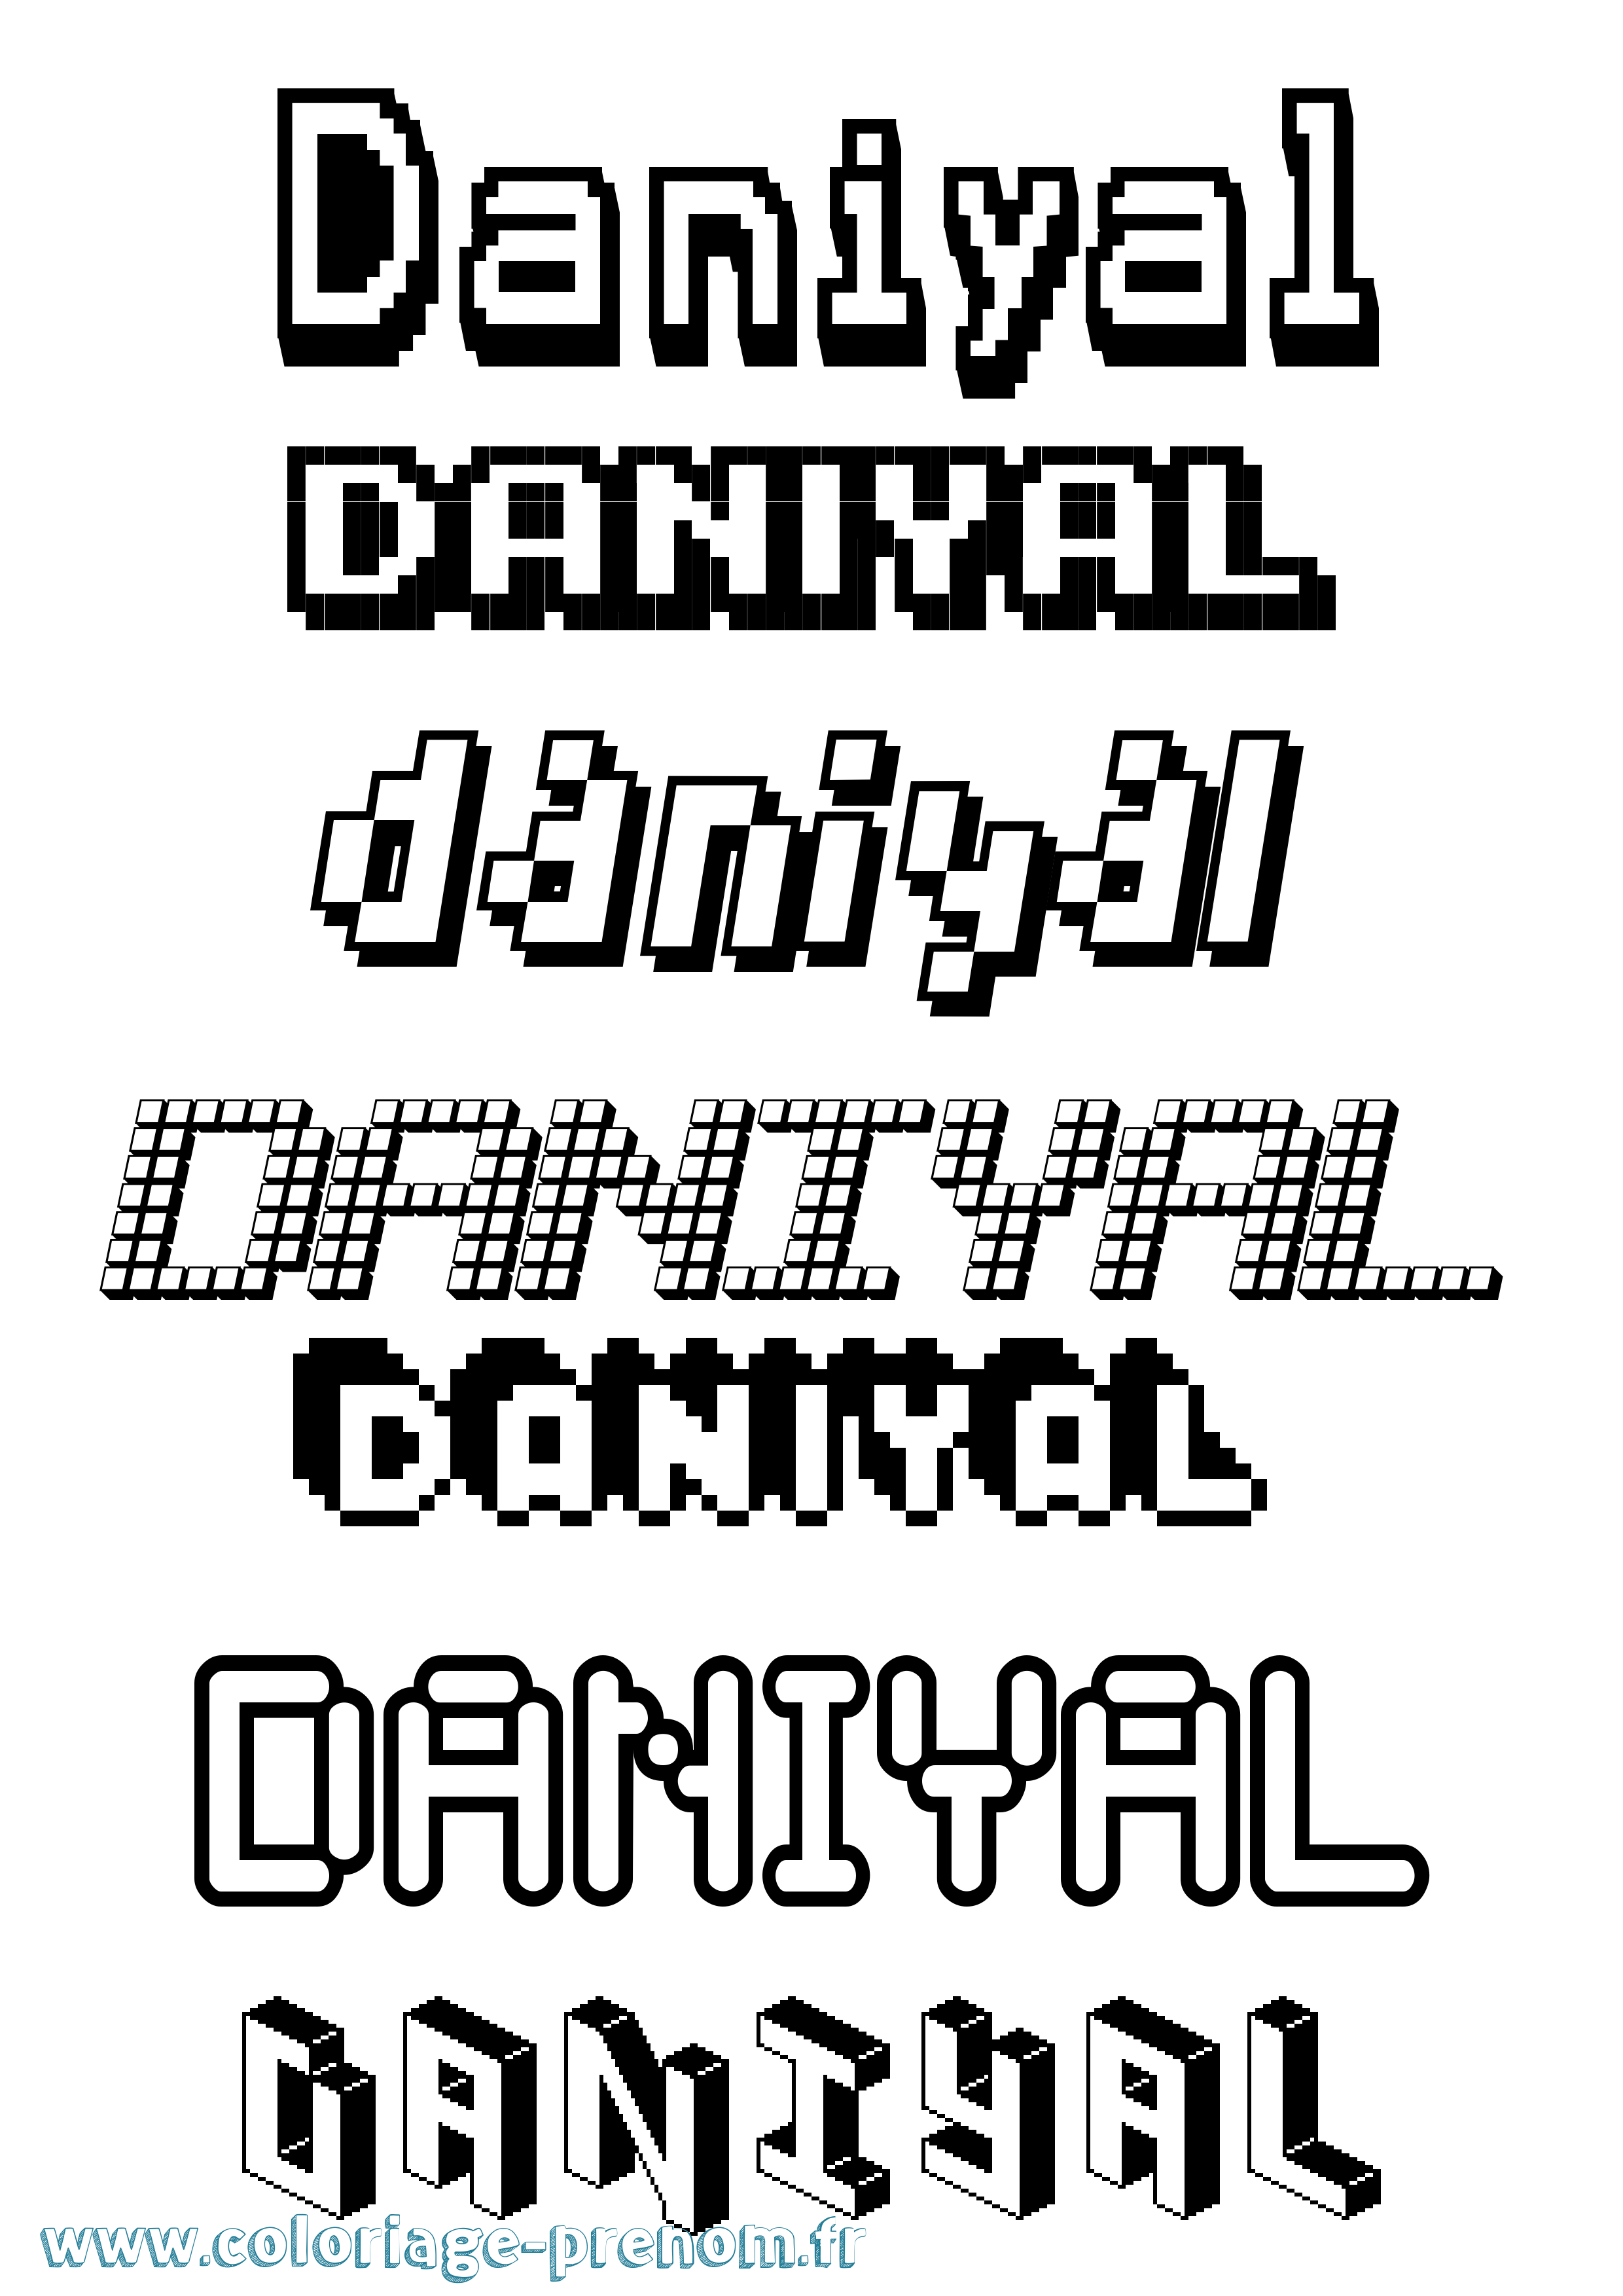 Coloriage prénom Daniyal Pixel